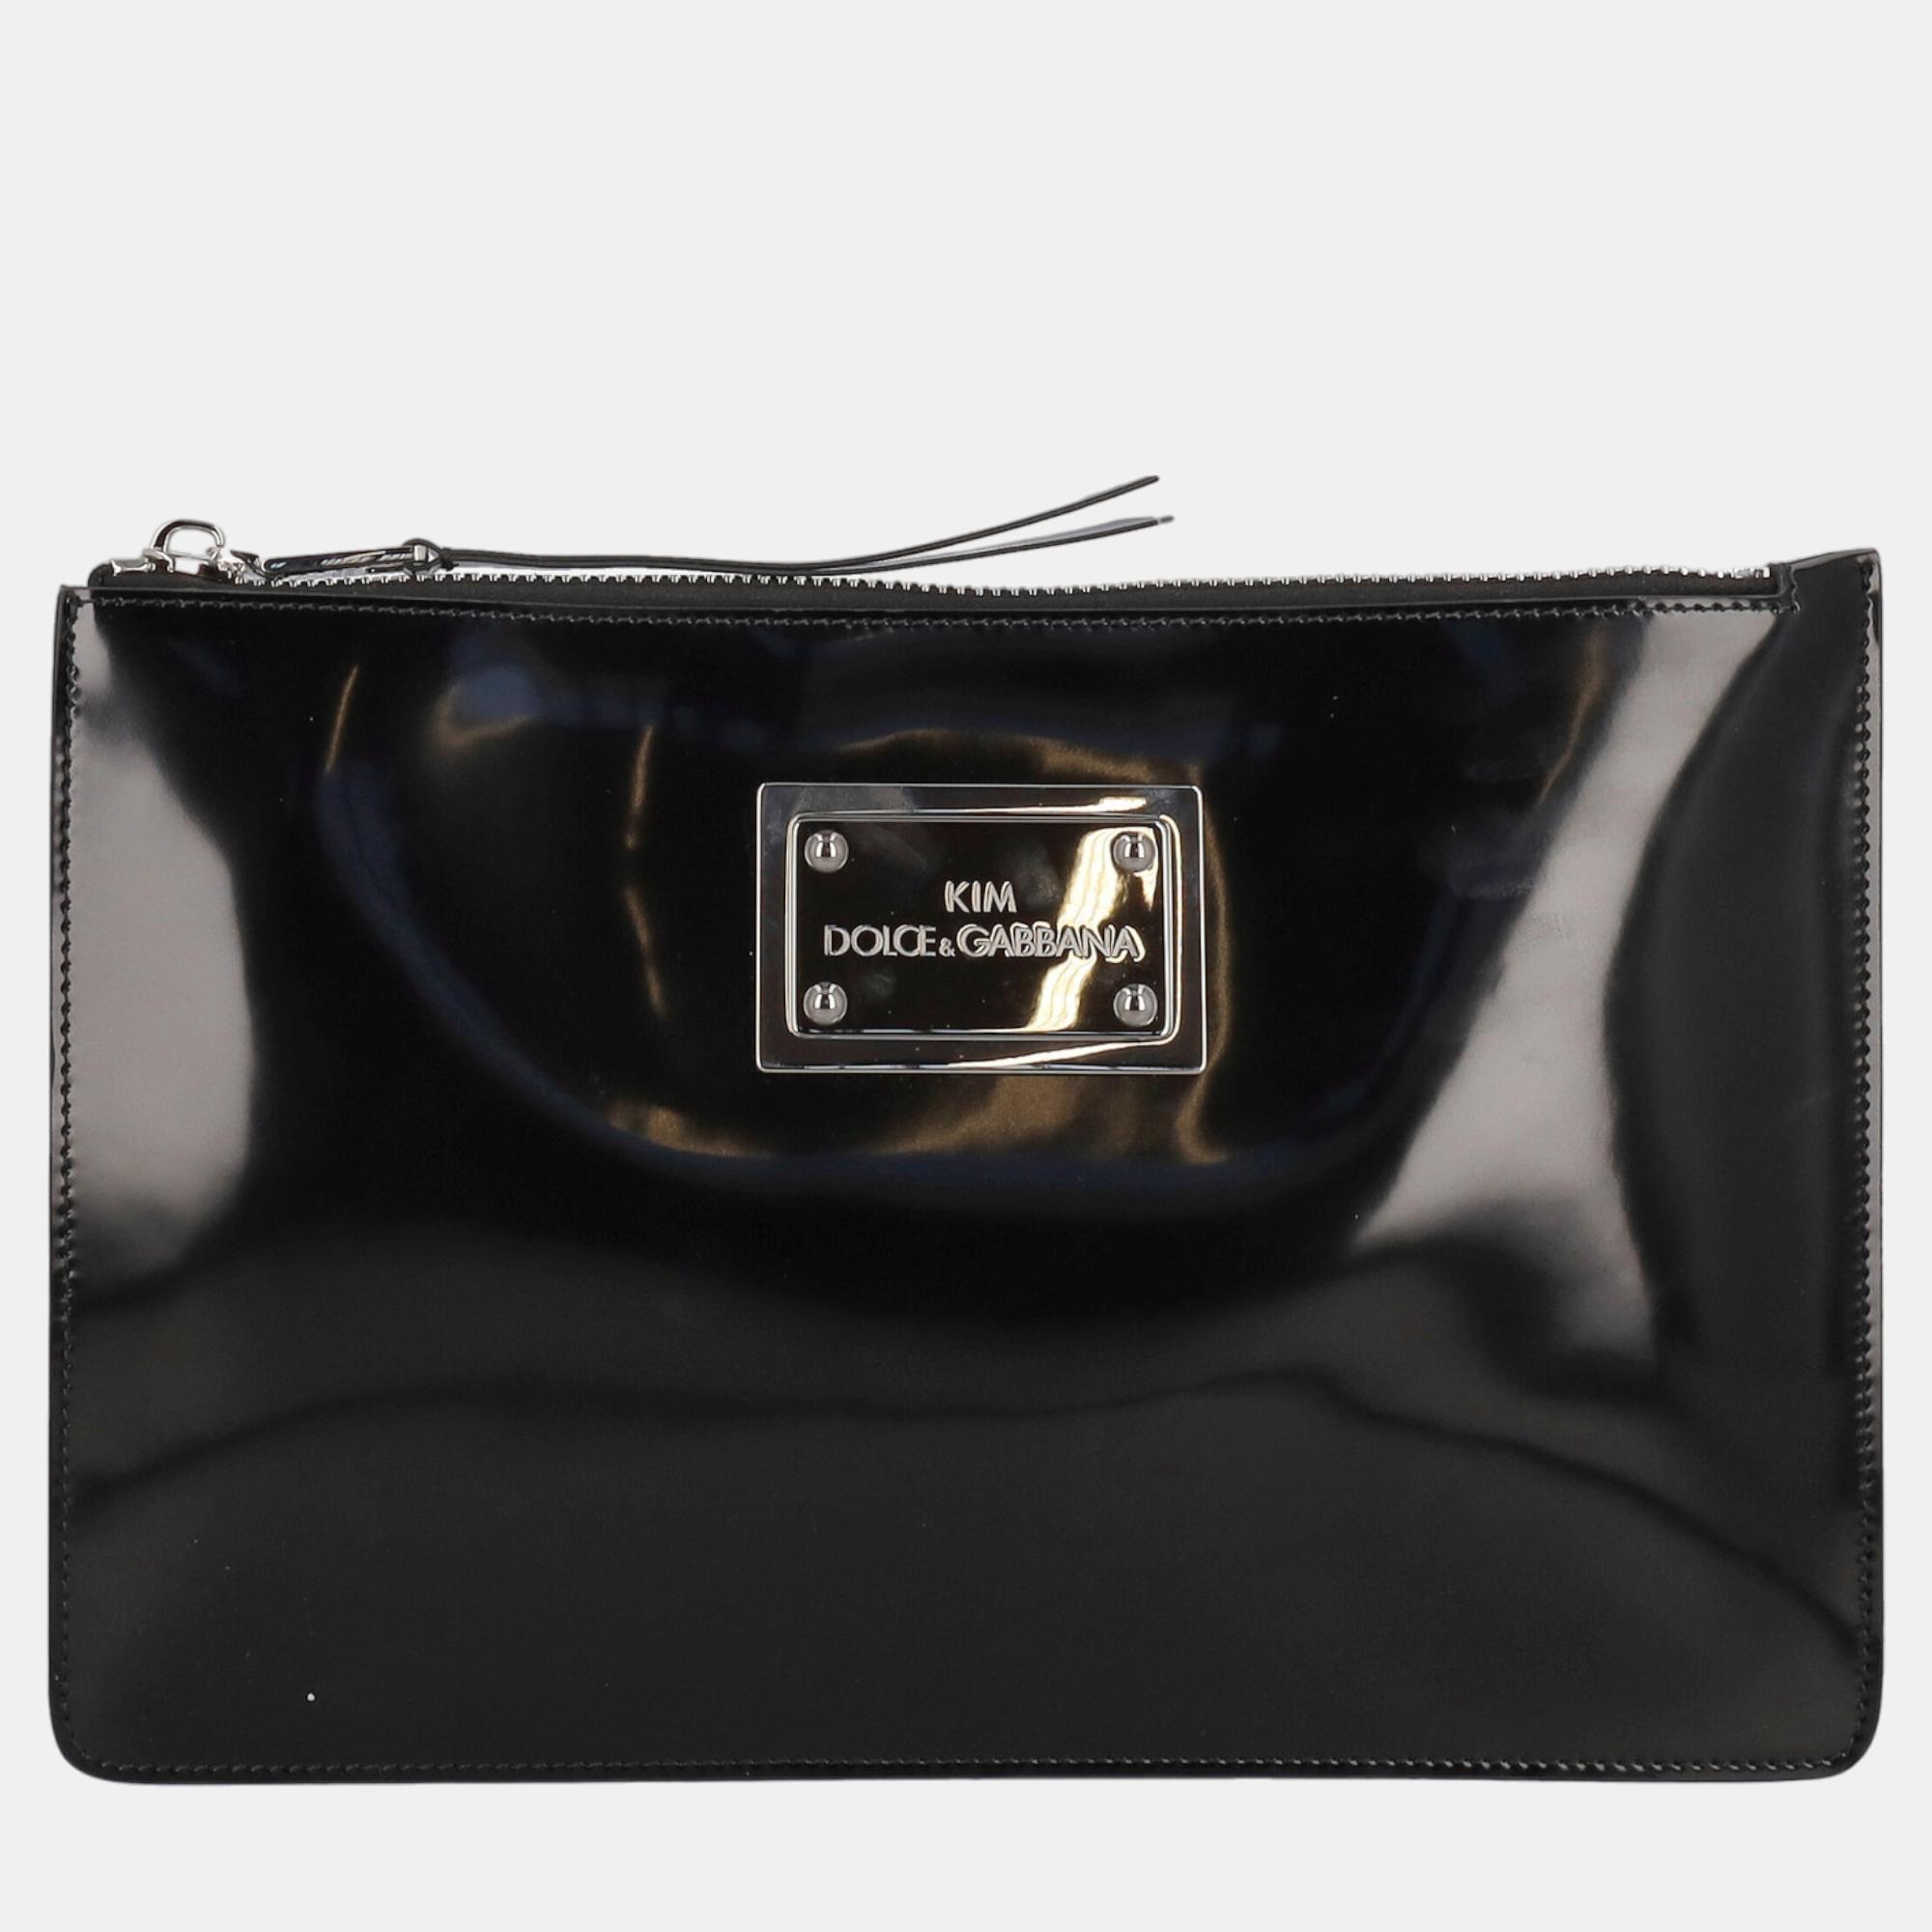 Dolce & Gabbana  Women's Leather Clutch Bag - Black - One Size